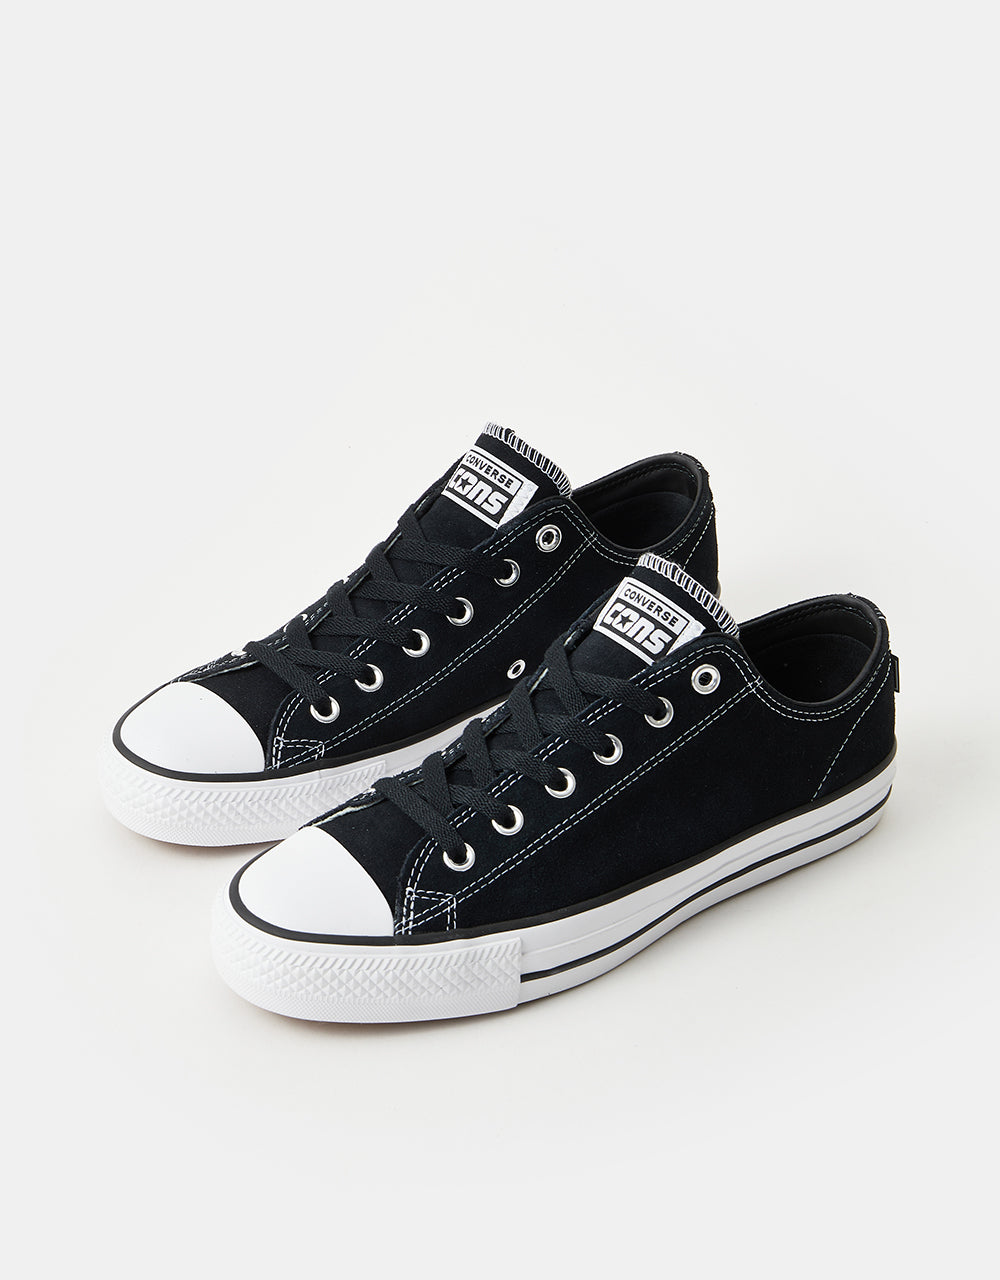 Converse CONS CTAS Pro Suede Skate Shoes - Black/Black/White – Route One